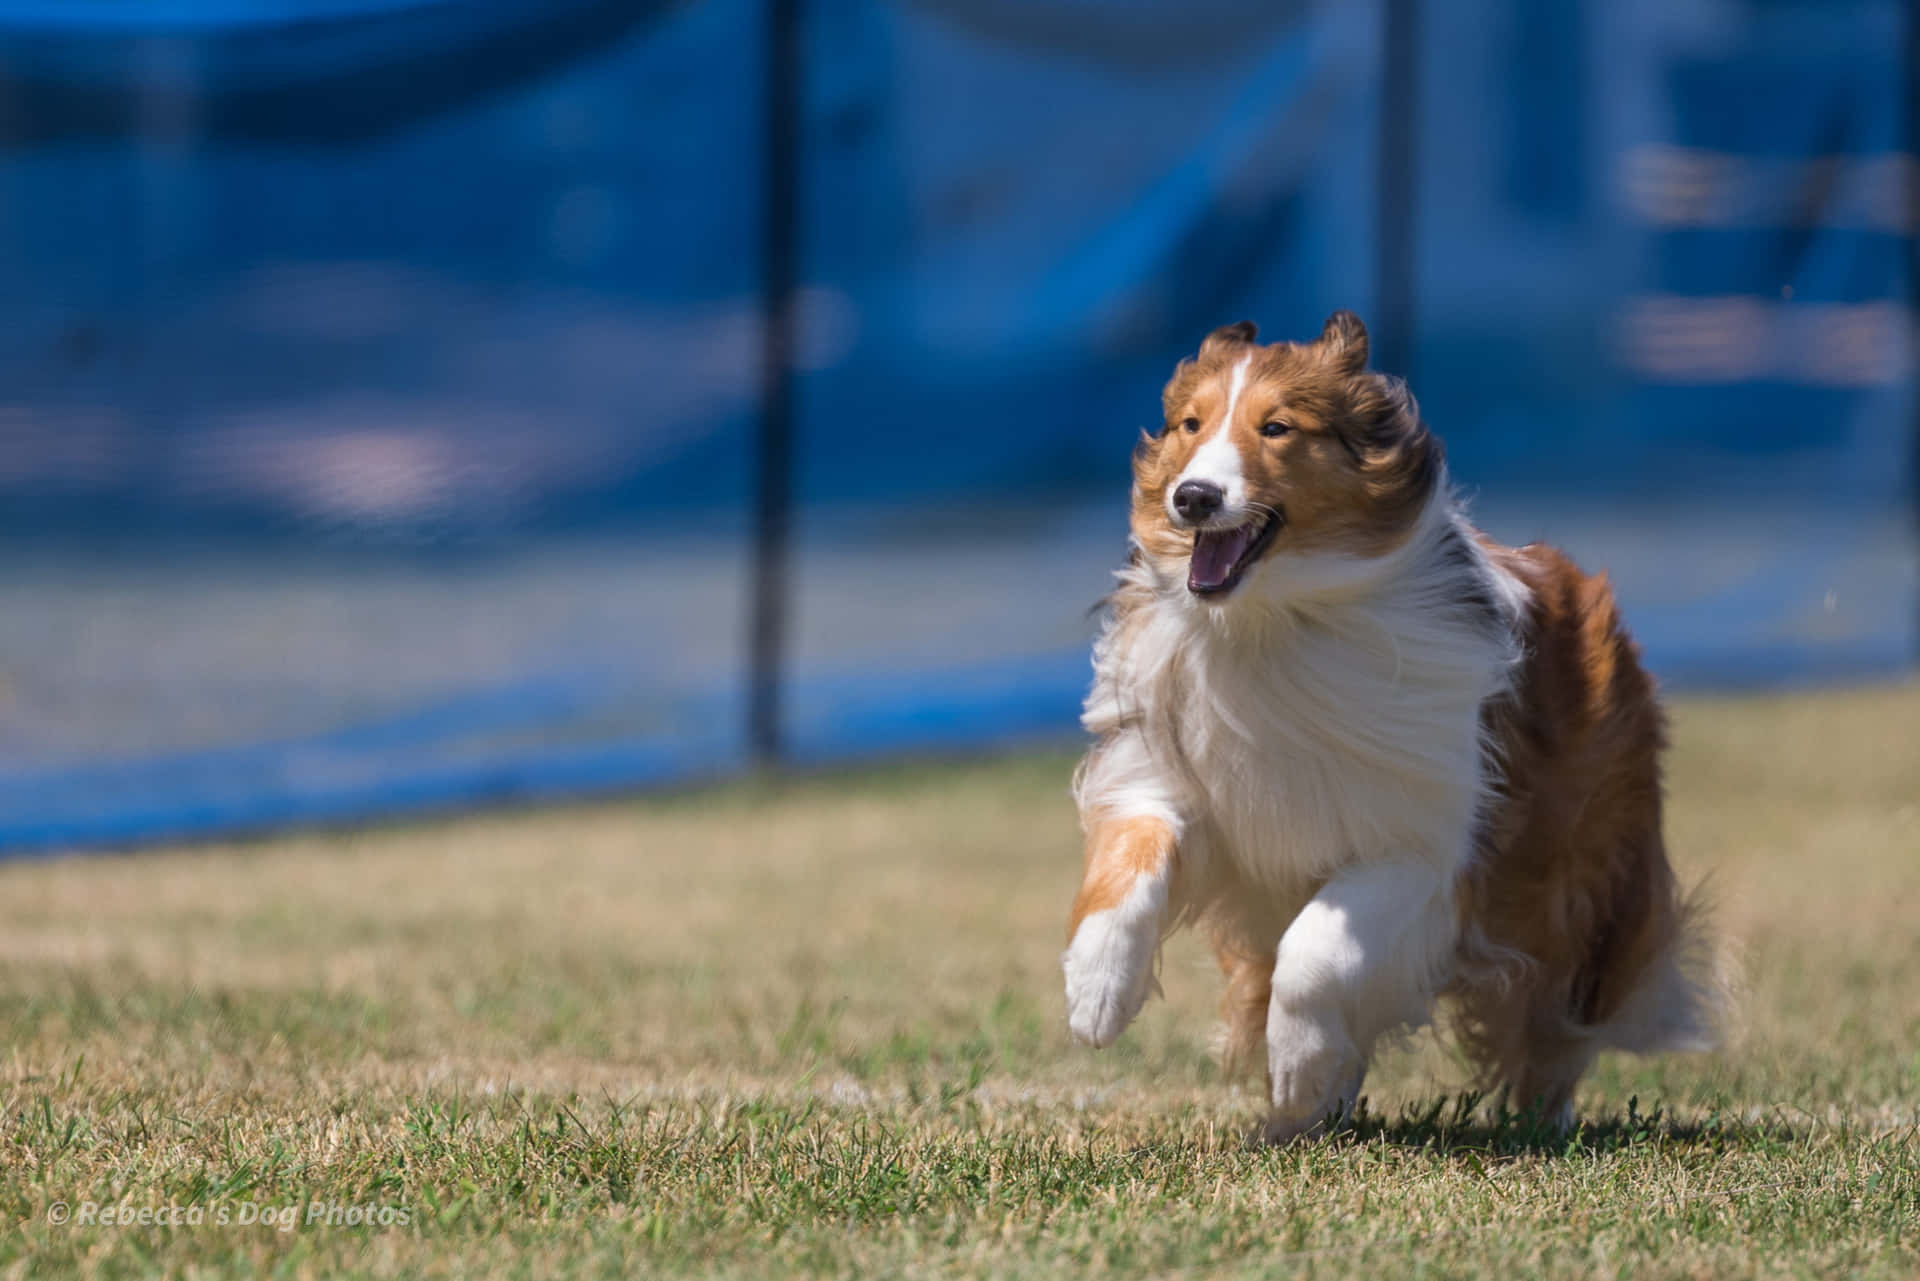 Caption: Energetic Dog Enjoying Outdoors Sports Adventure Wallpaper